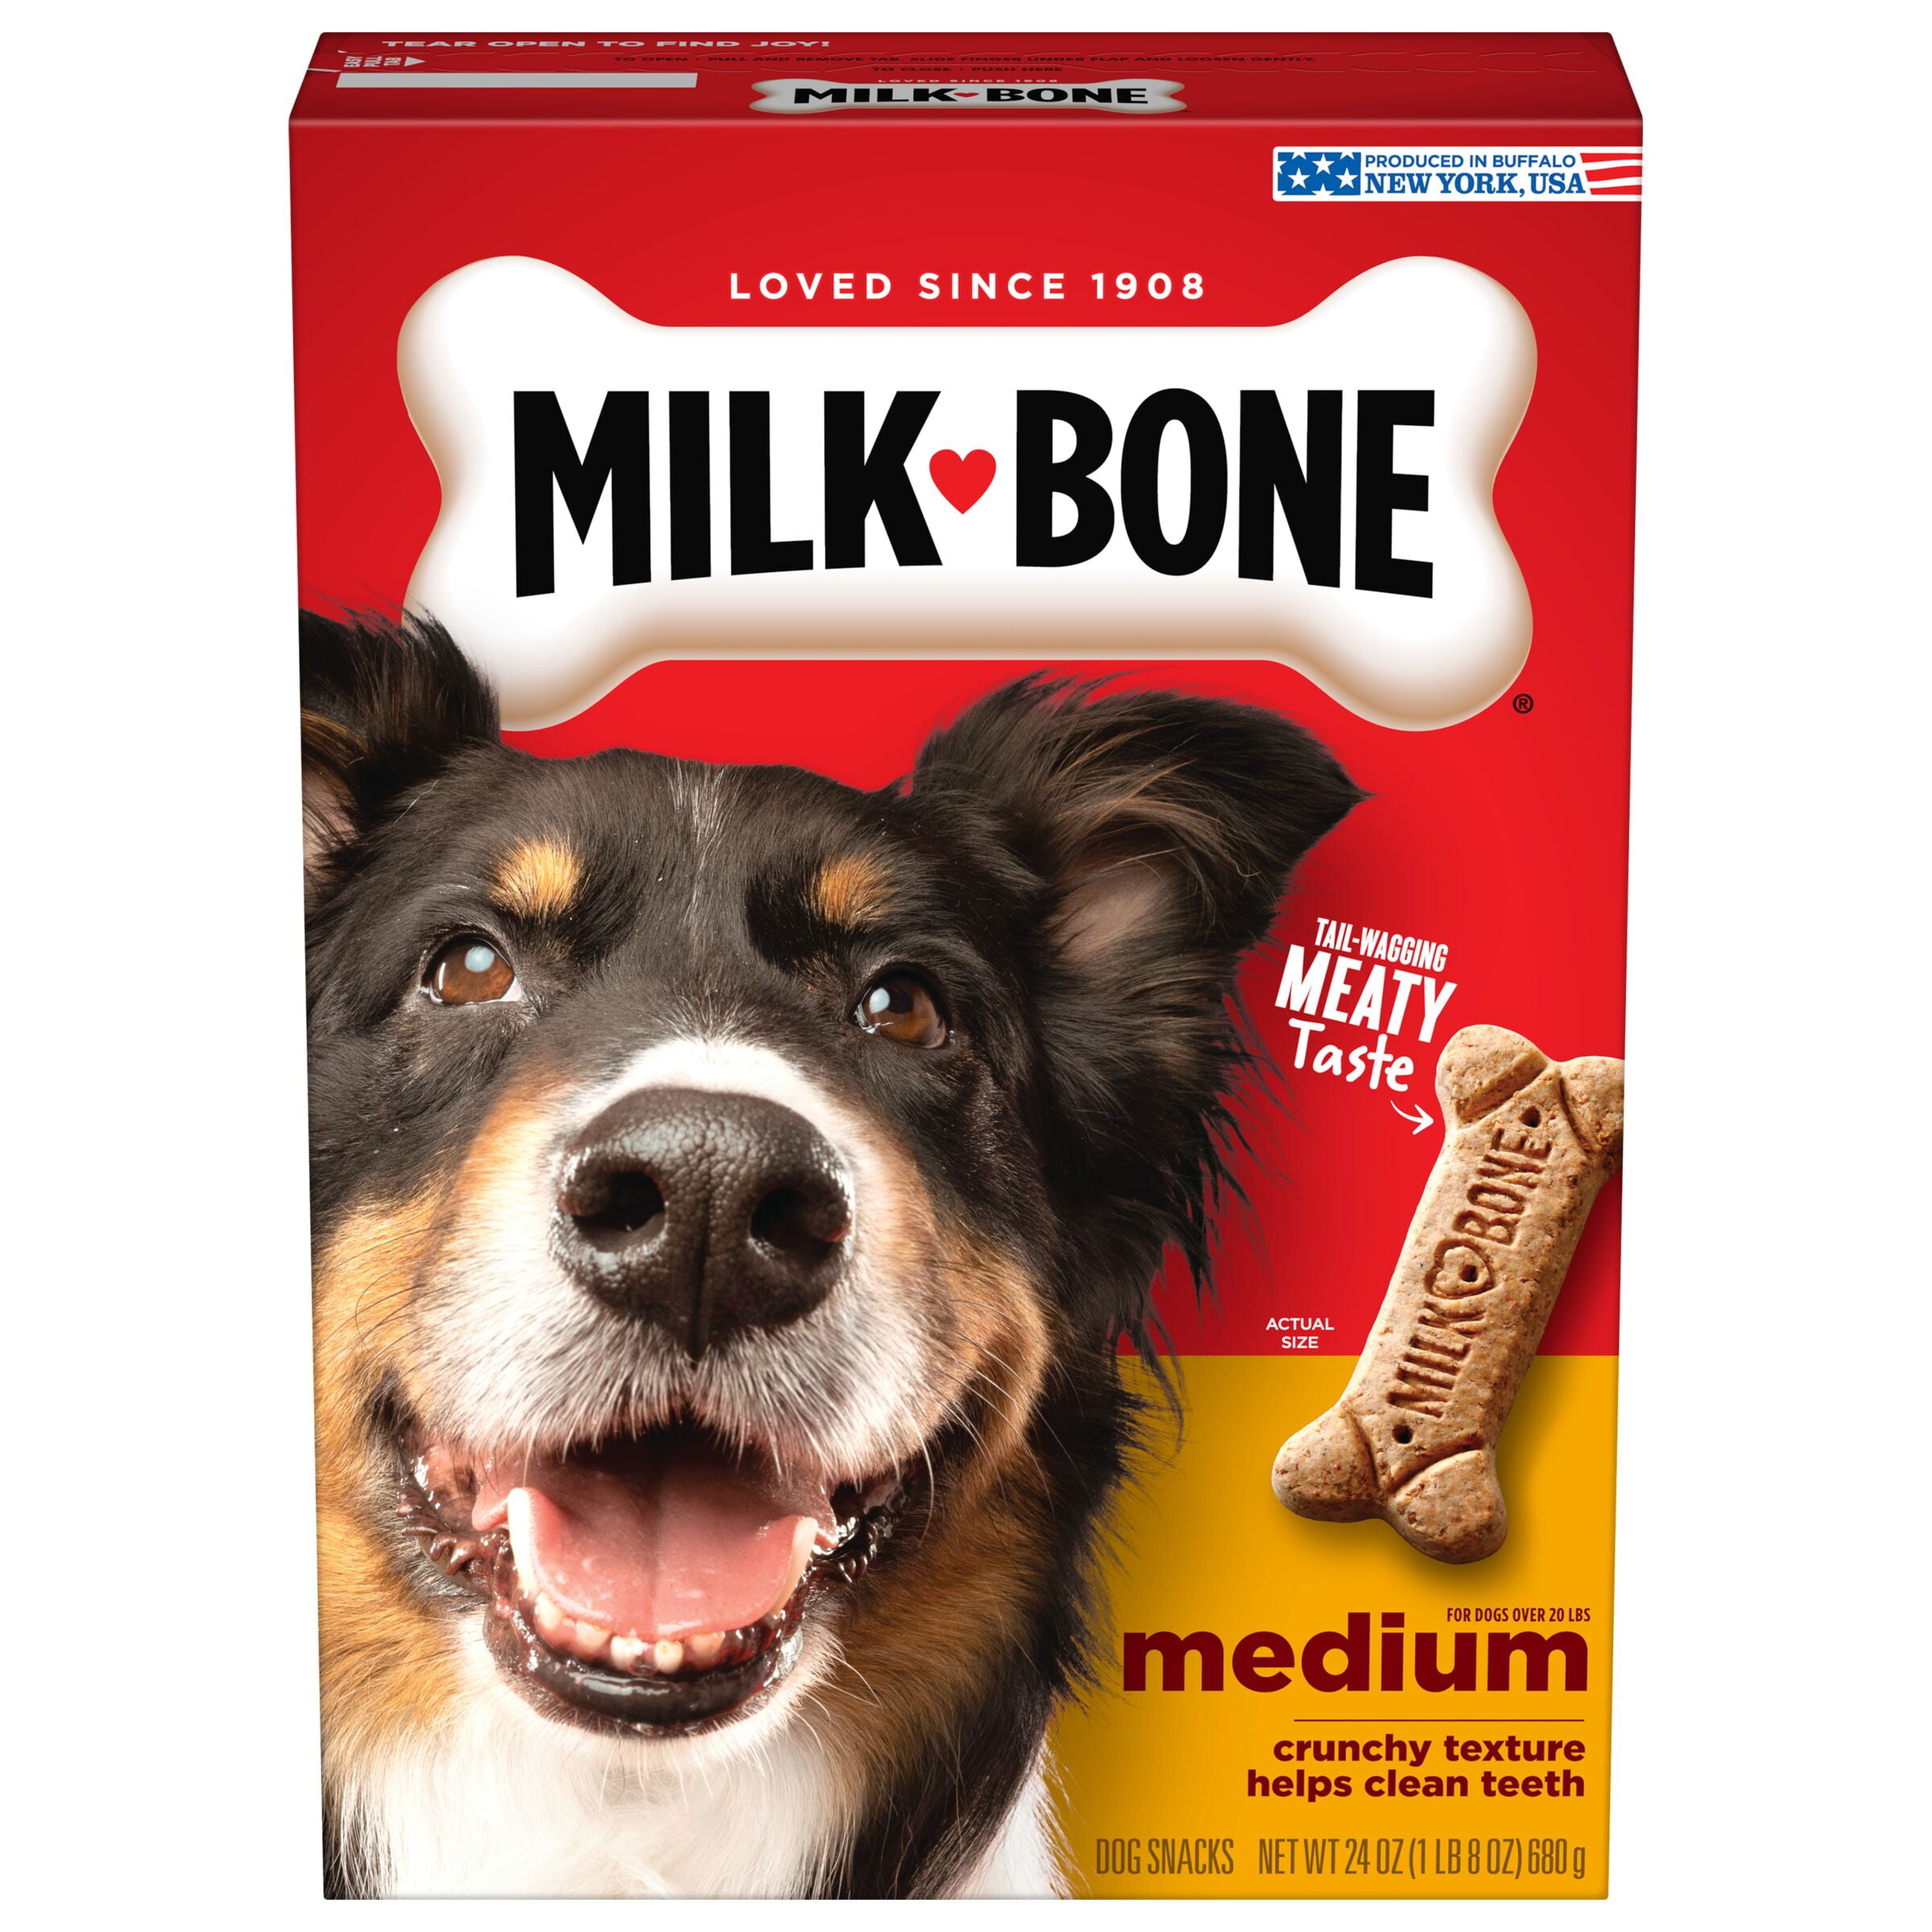 Milk-Bone Original Dog Biscuits, Medium Crunchy Dog Treats, 24 oz.